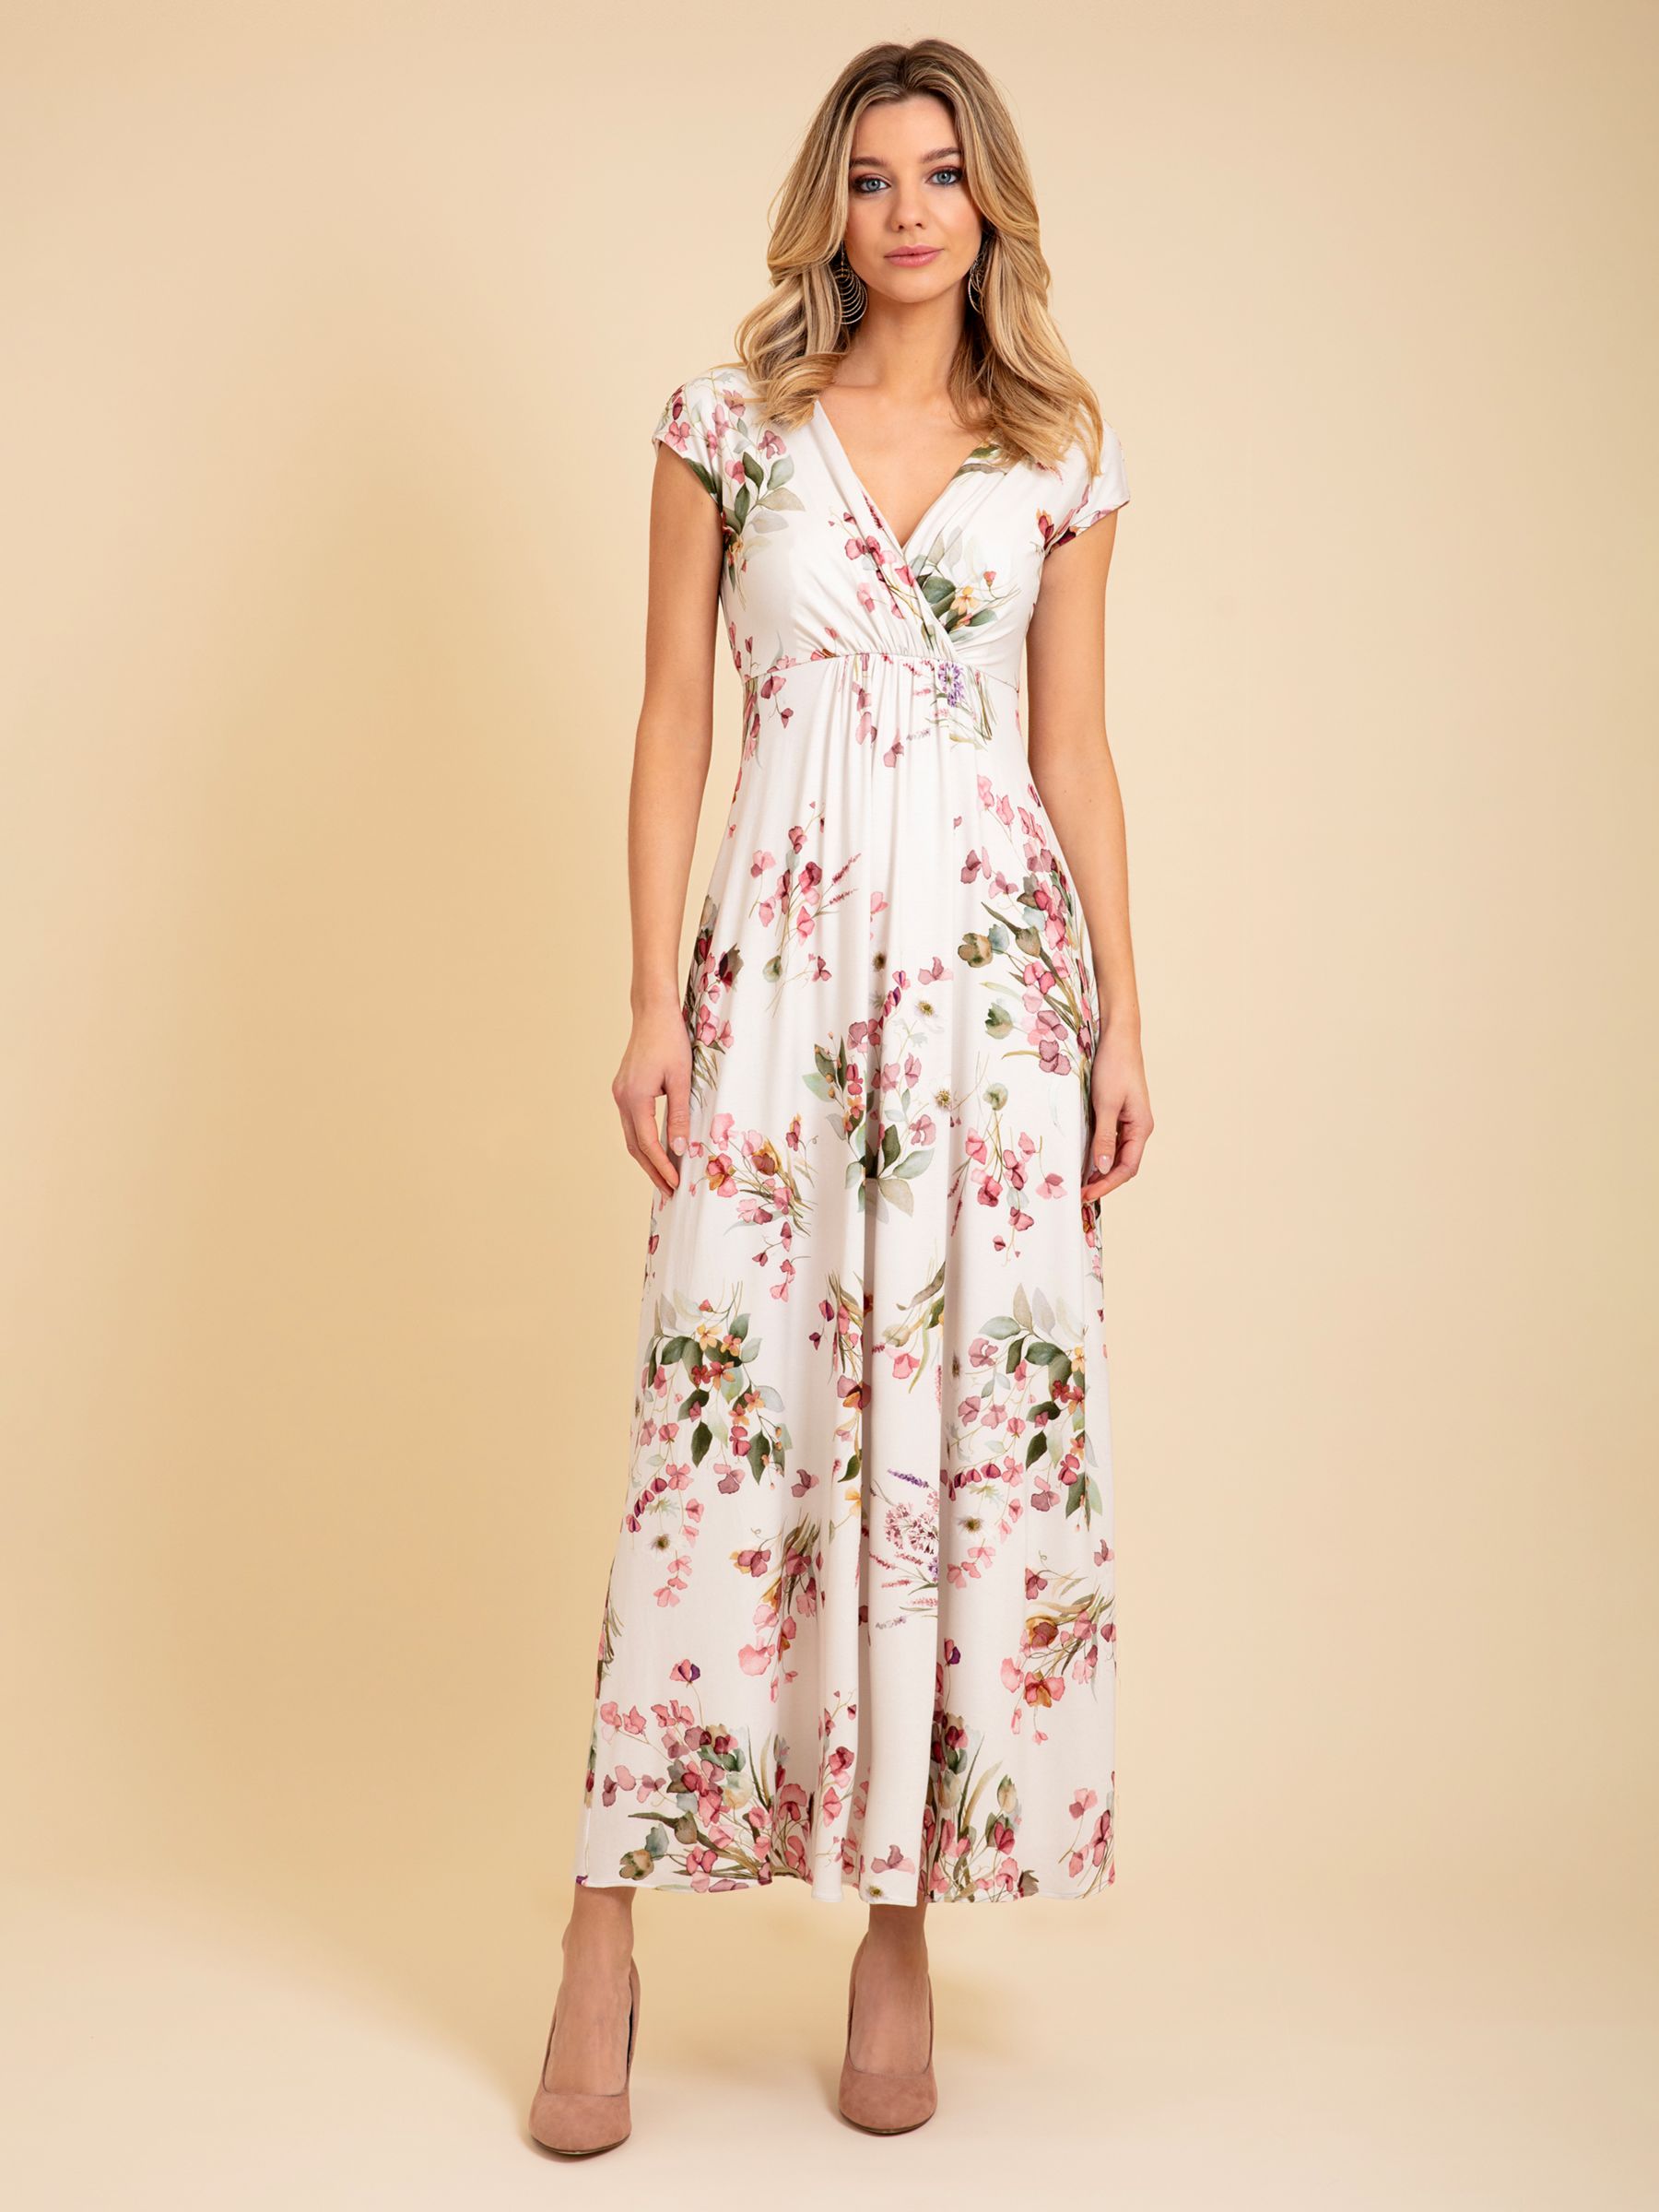 Alie Street Sophia Floral Maxi Dress, Pink/Multi, 6-8